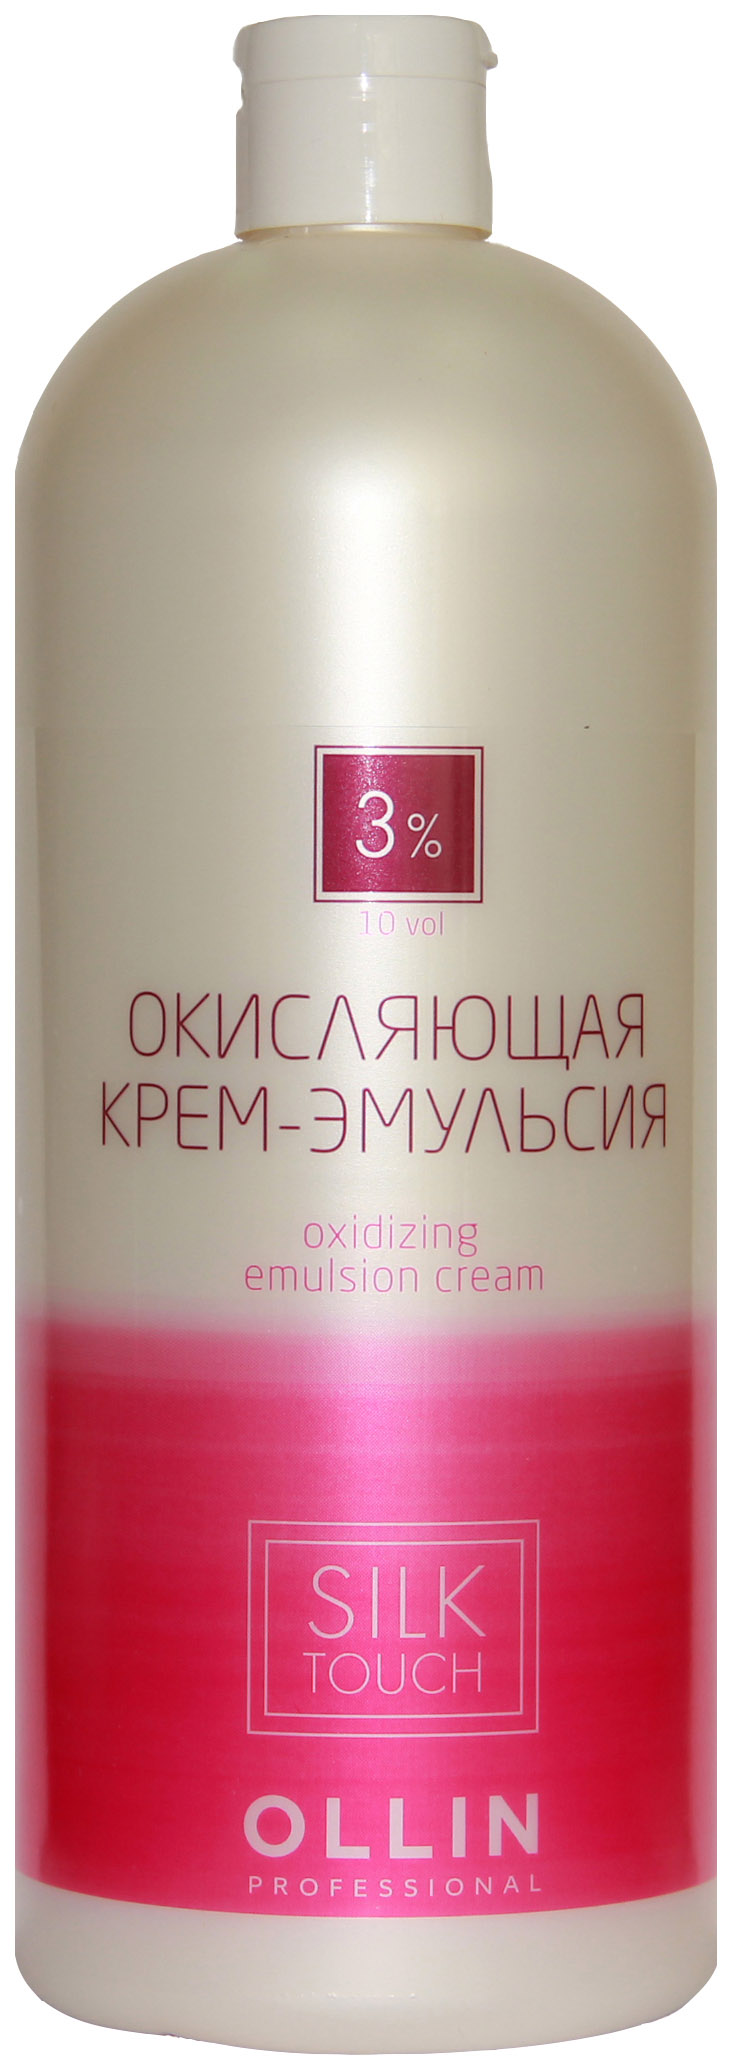 Проявитель Ollin Professional Silk Touch 3% 1000 мл бутылка bodrost 1000 мл